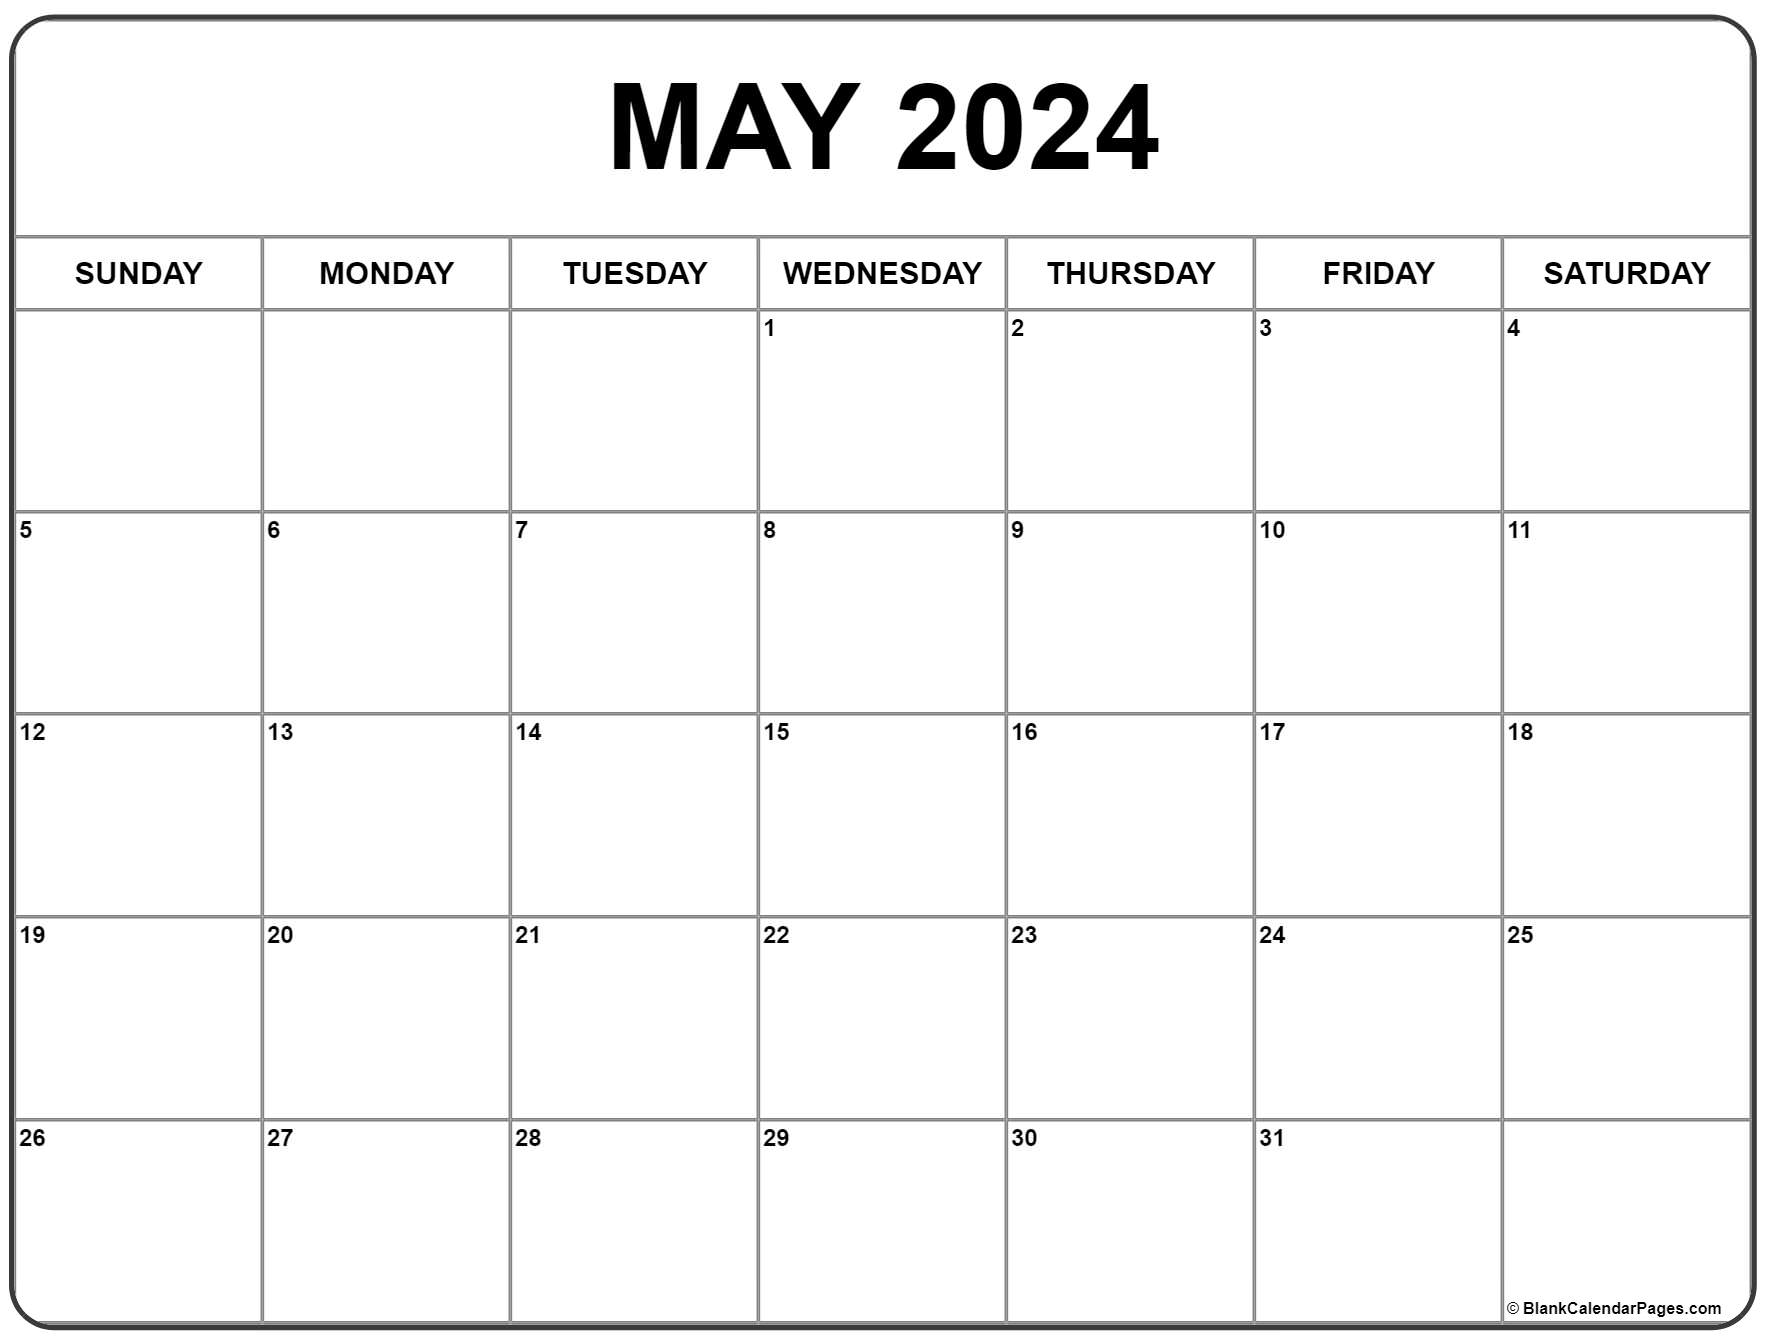 May 2024 Calendar | Free Printable Calendar for Free Printable May 2024 Calendar